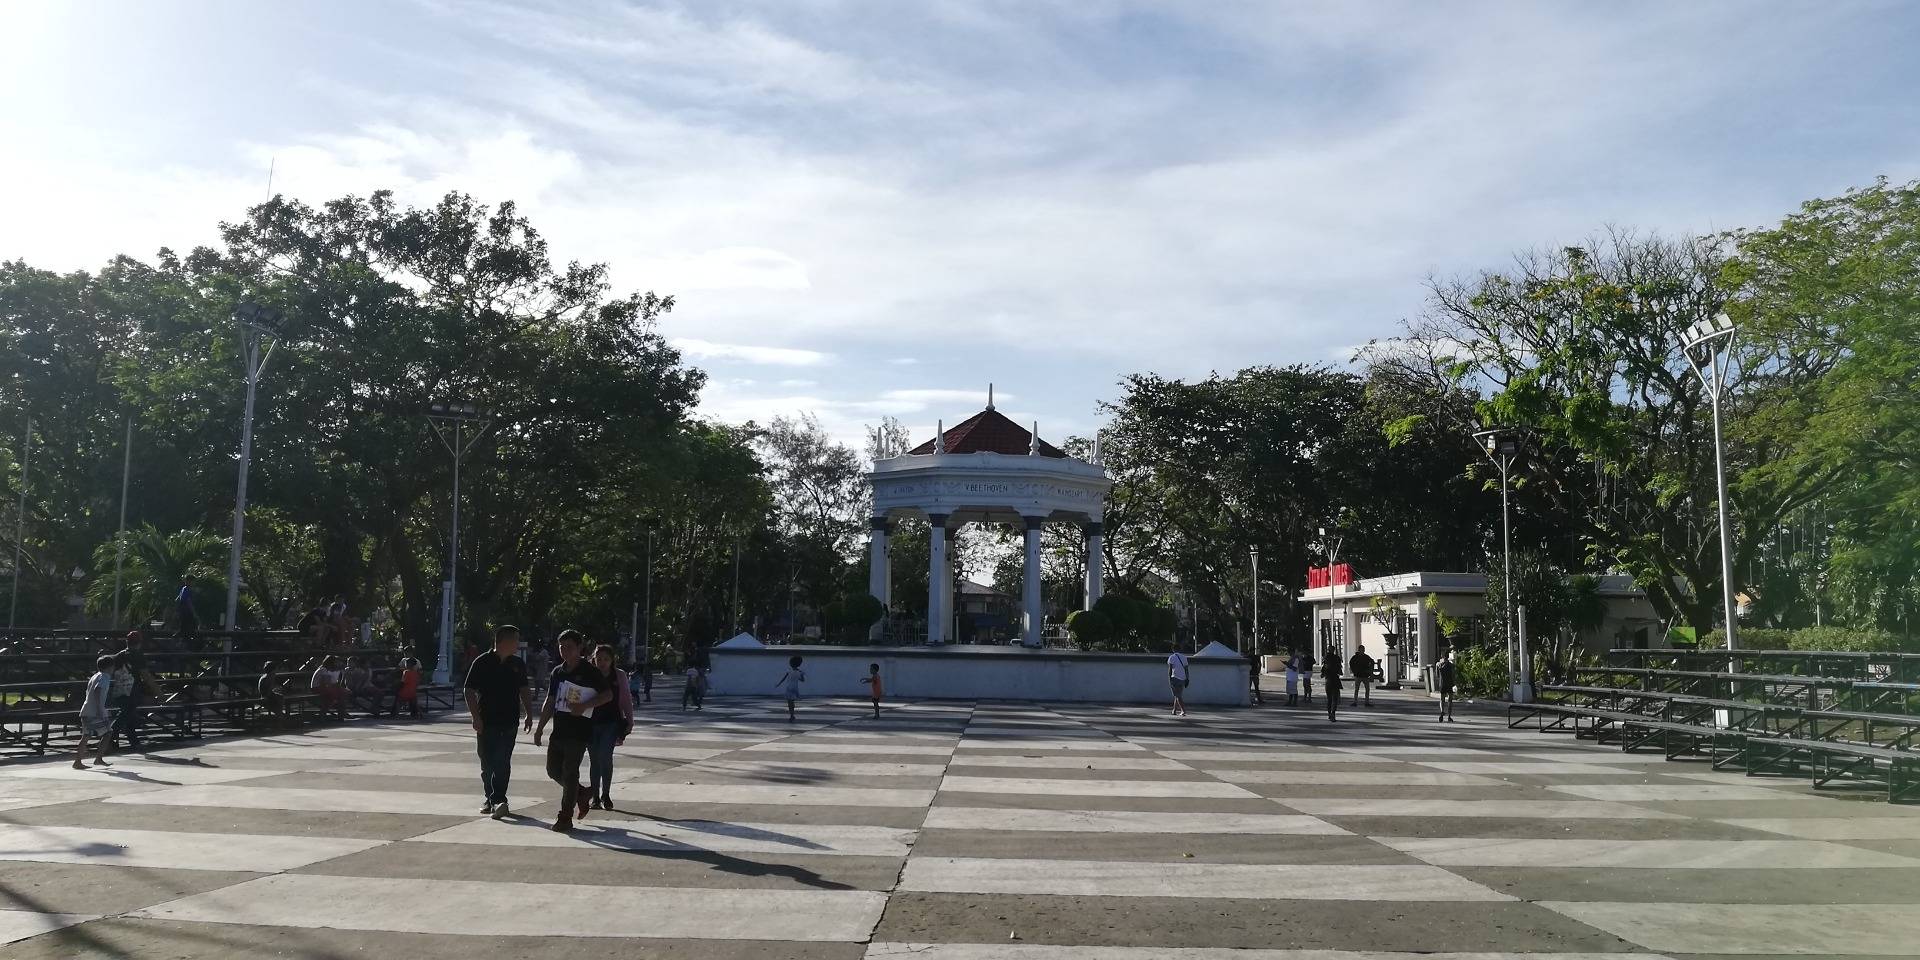 Taken last February 2020 at the Bacolod City Public Plaza